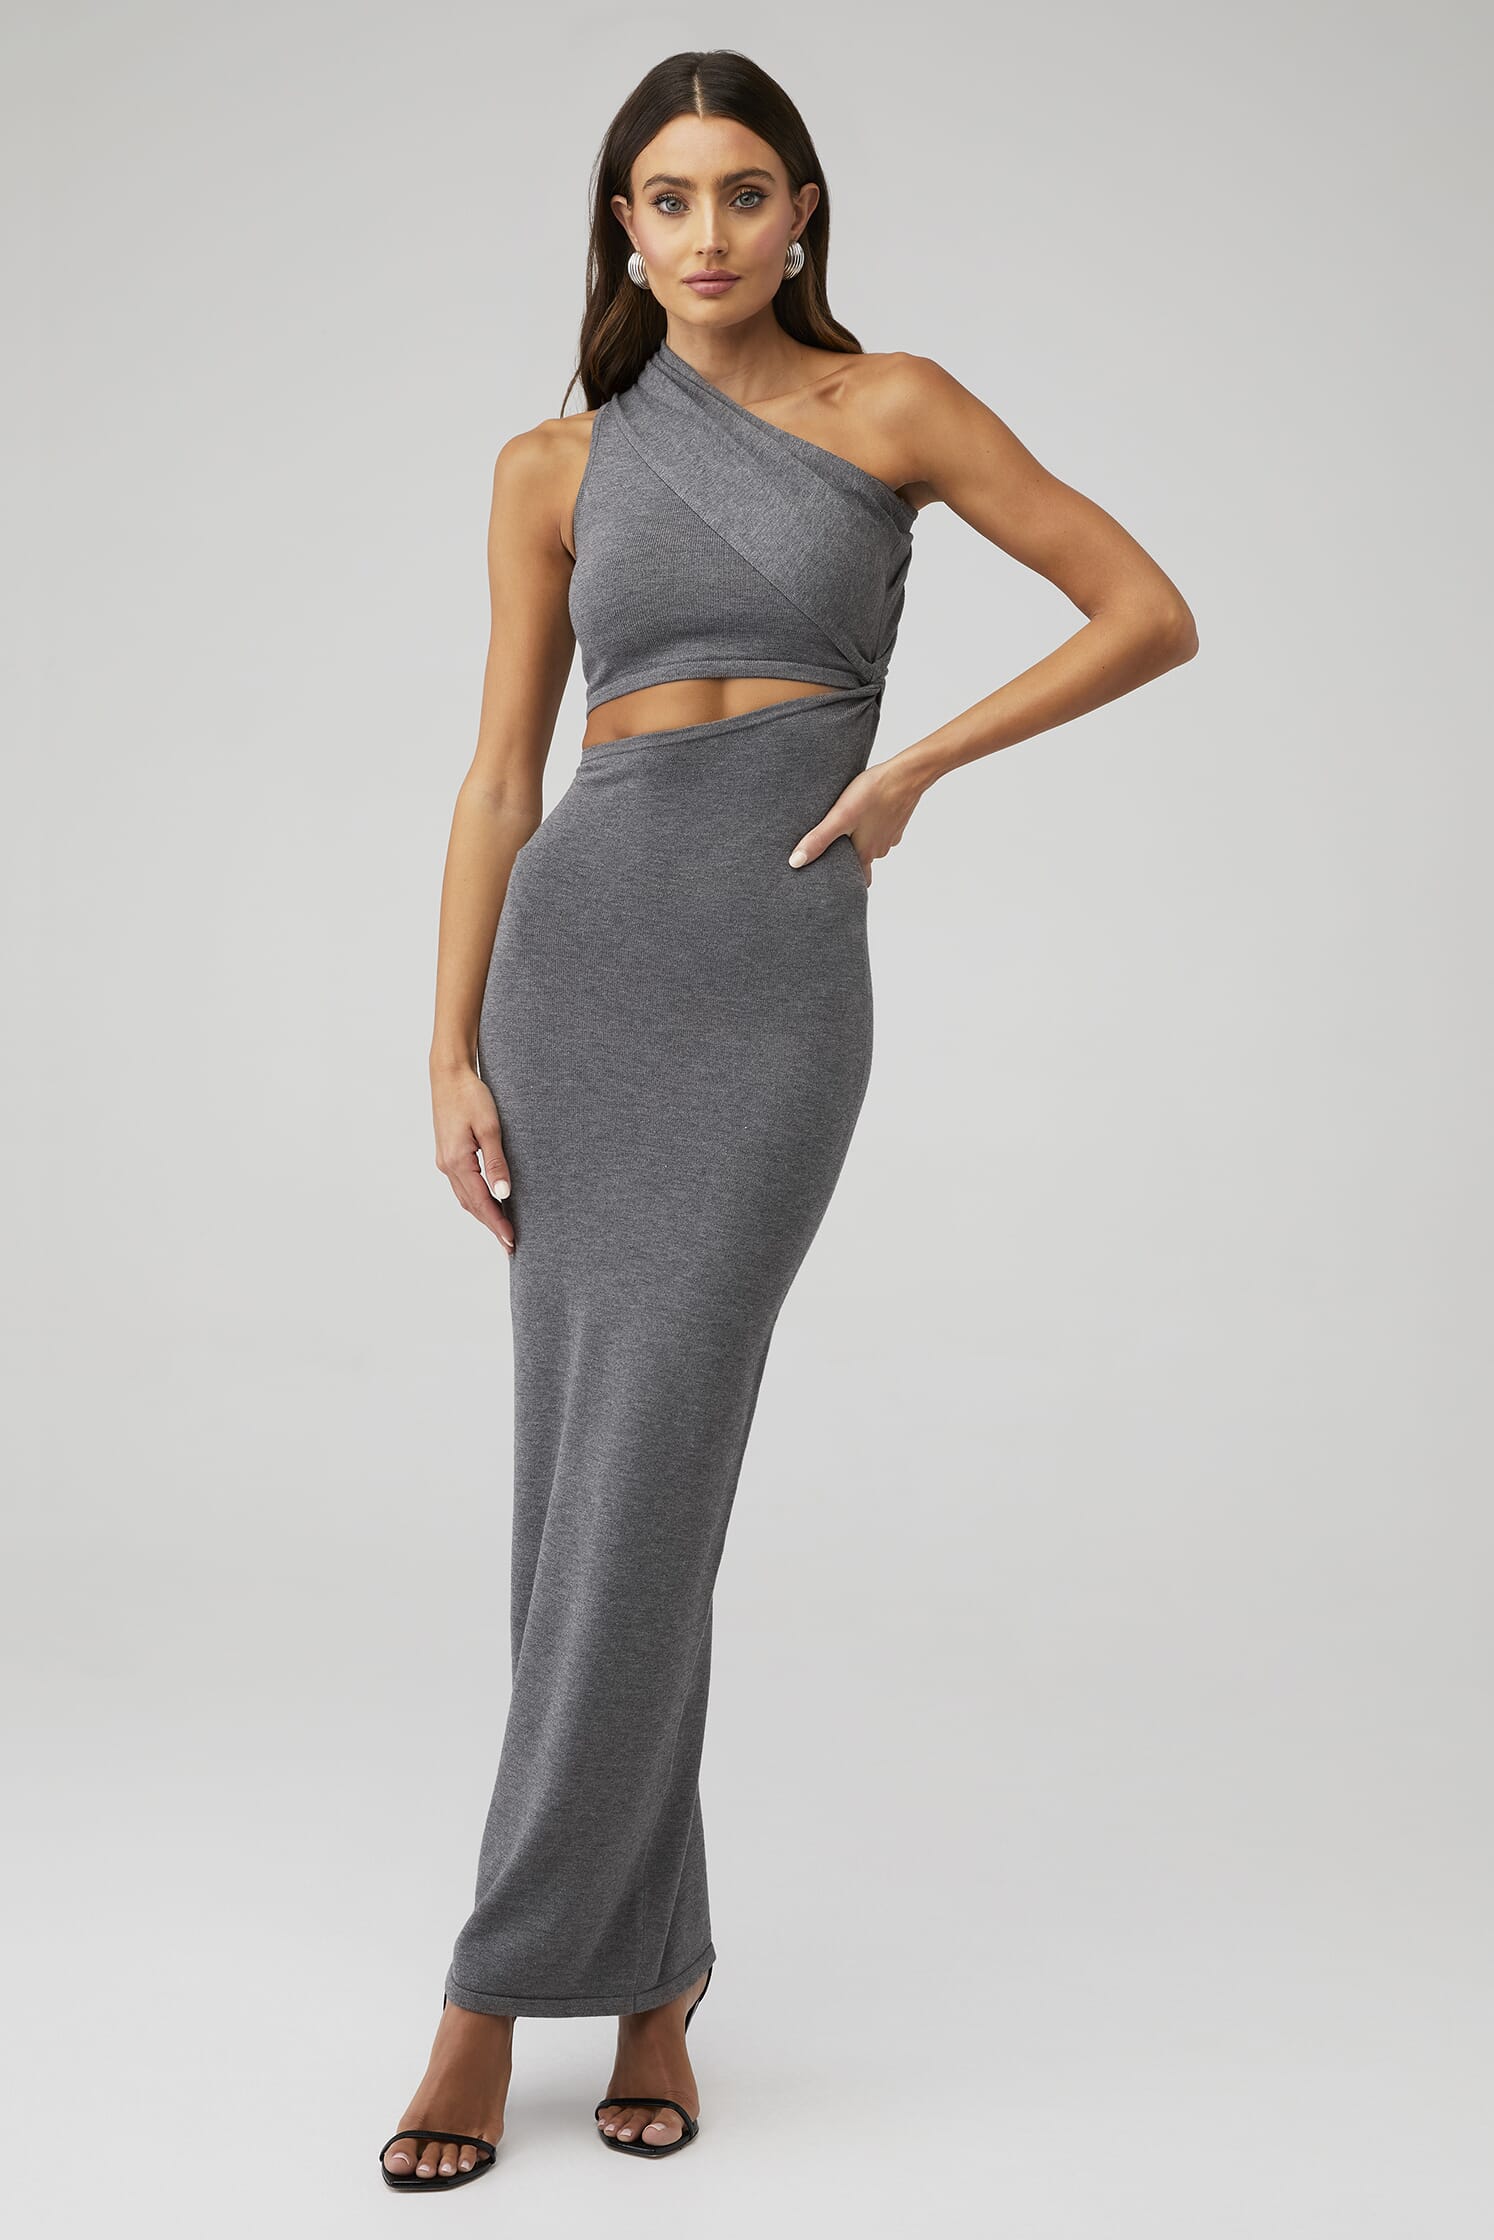 Ronny Kobo | Zoe Knit Dress in Grey| FashionPass